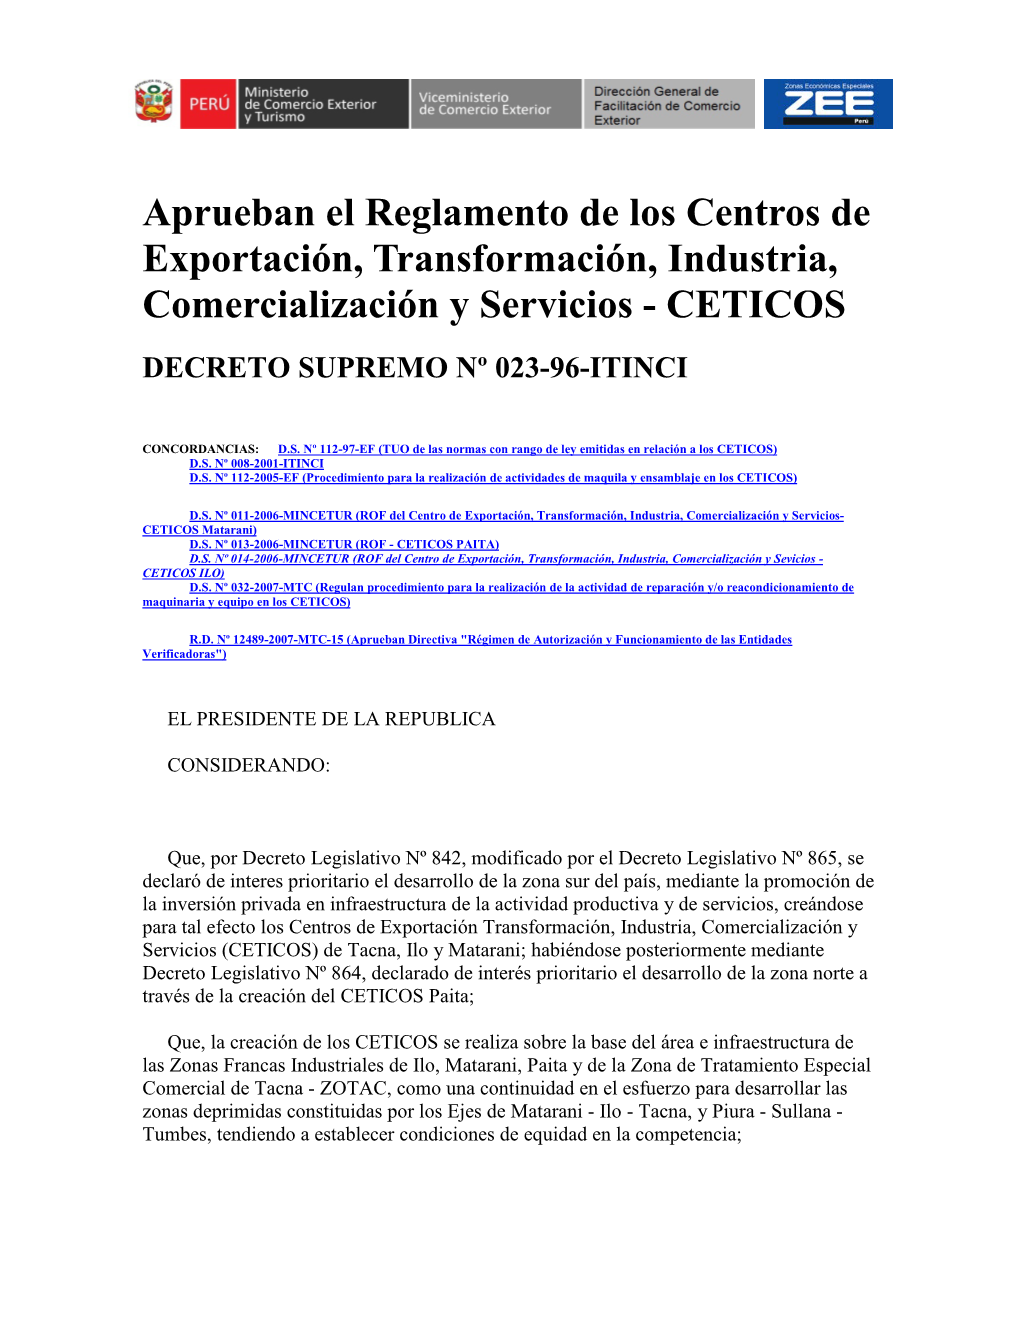 Ceticos Decreto Supremo Nº 023-96-Itinci